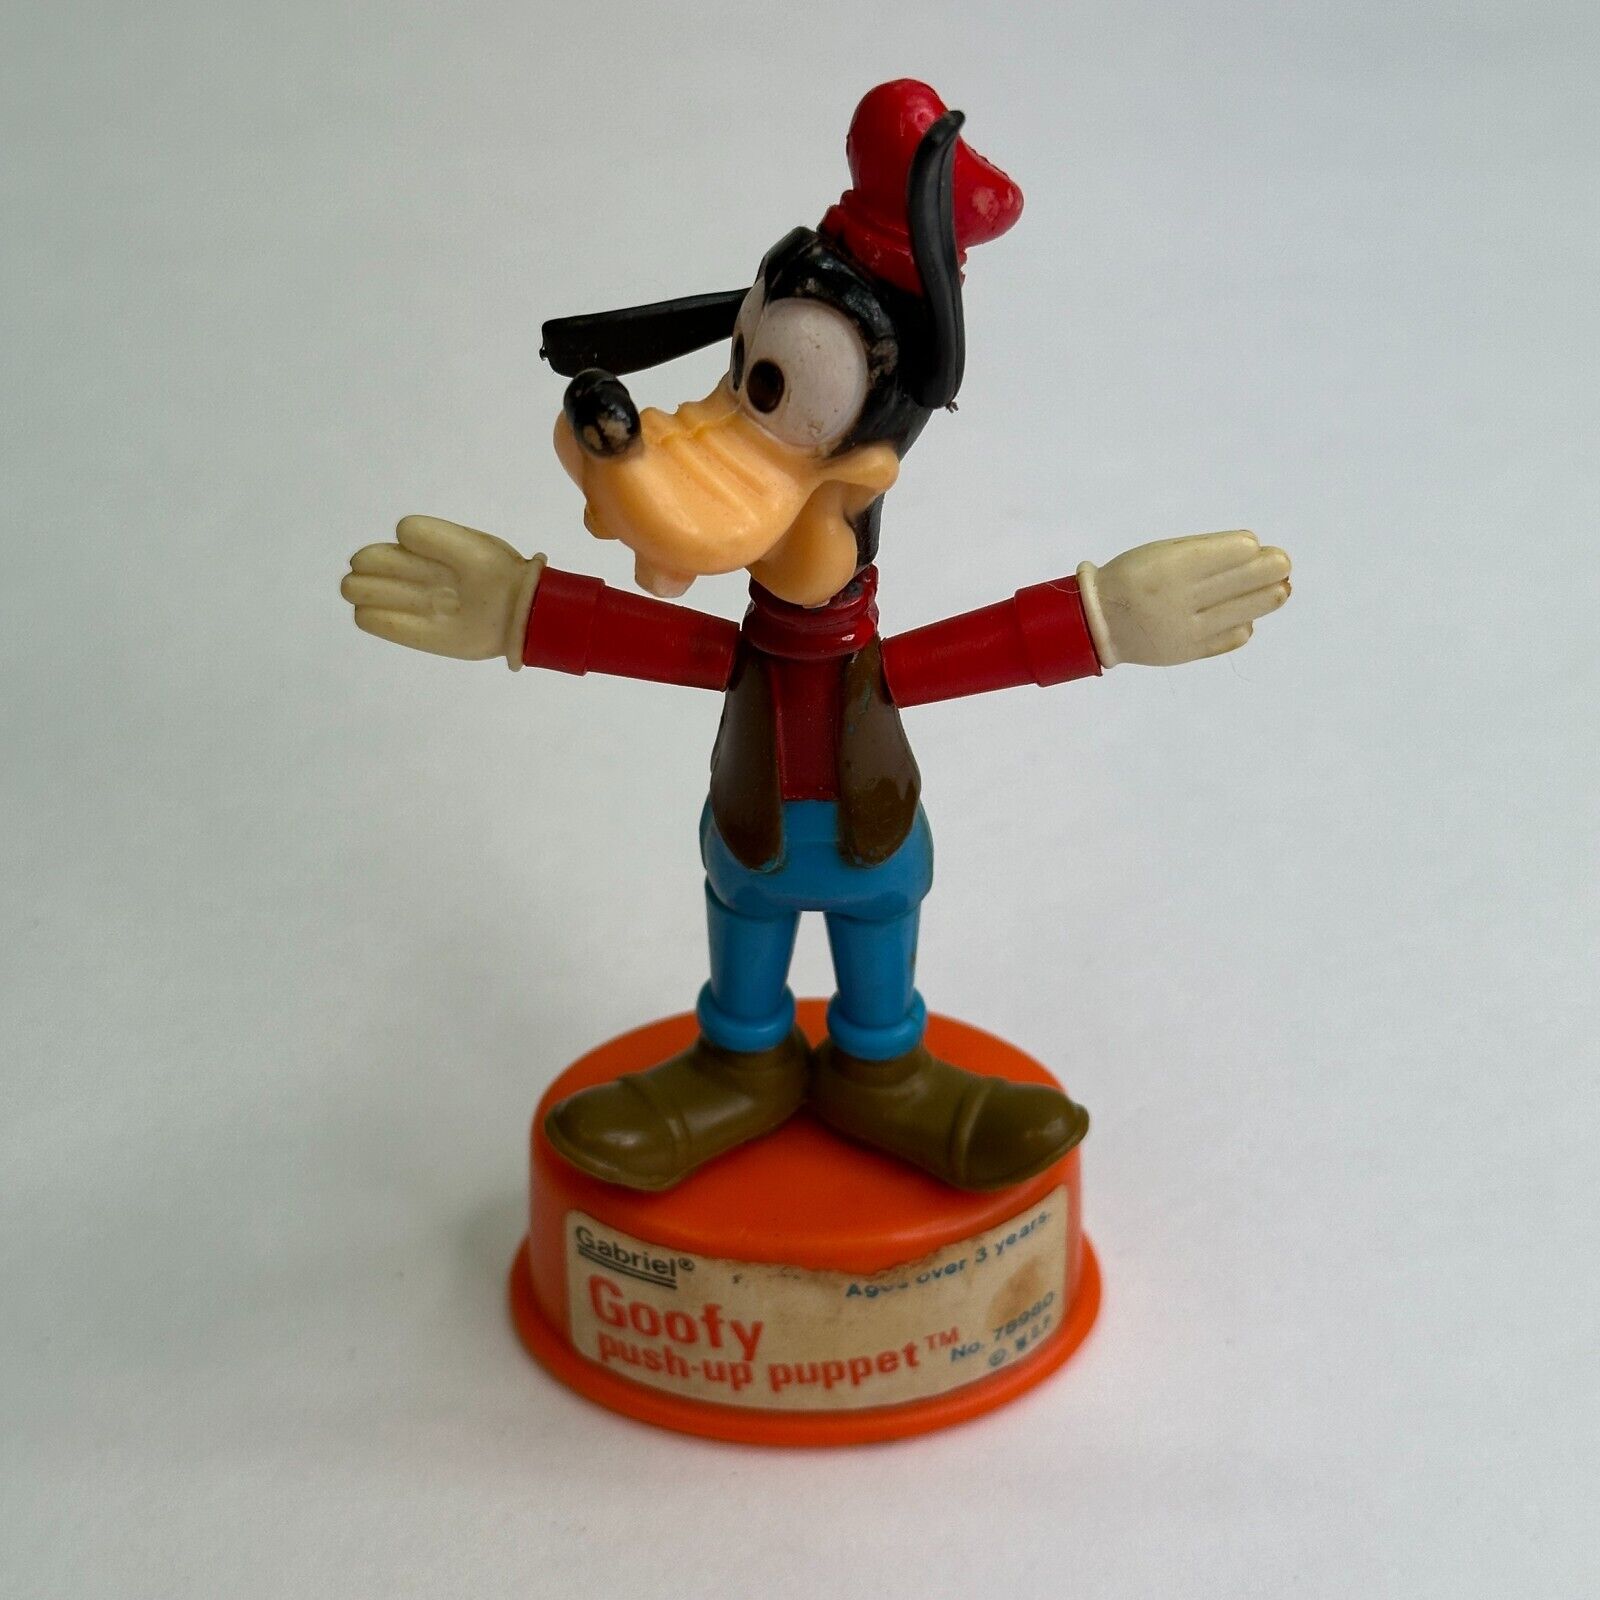 Vintage 1977 Gabriel Disney Goofy Push Up Puppet